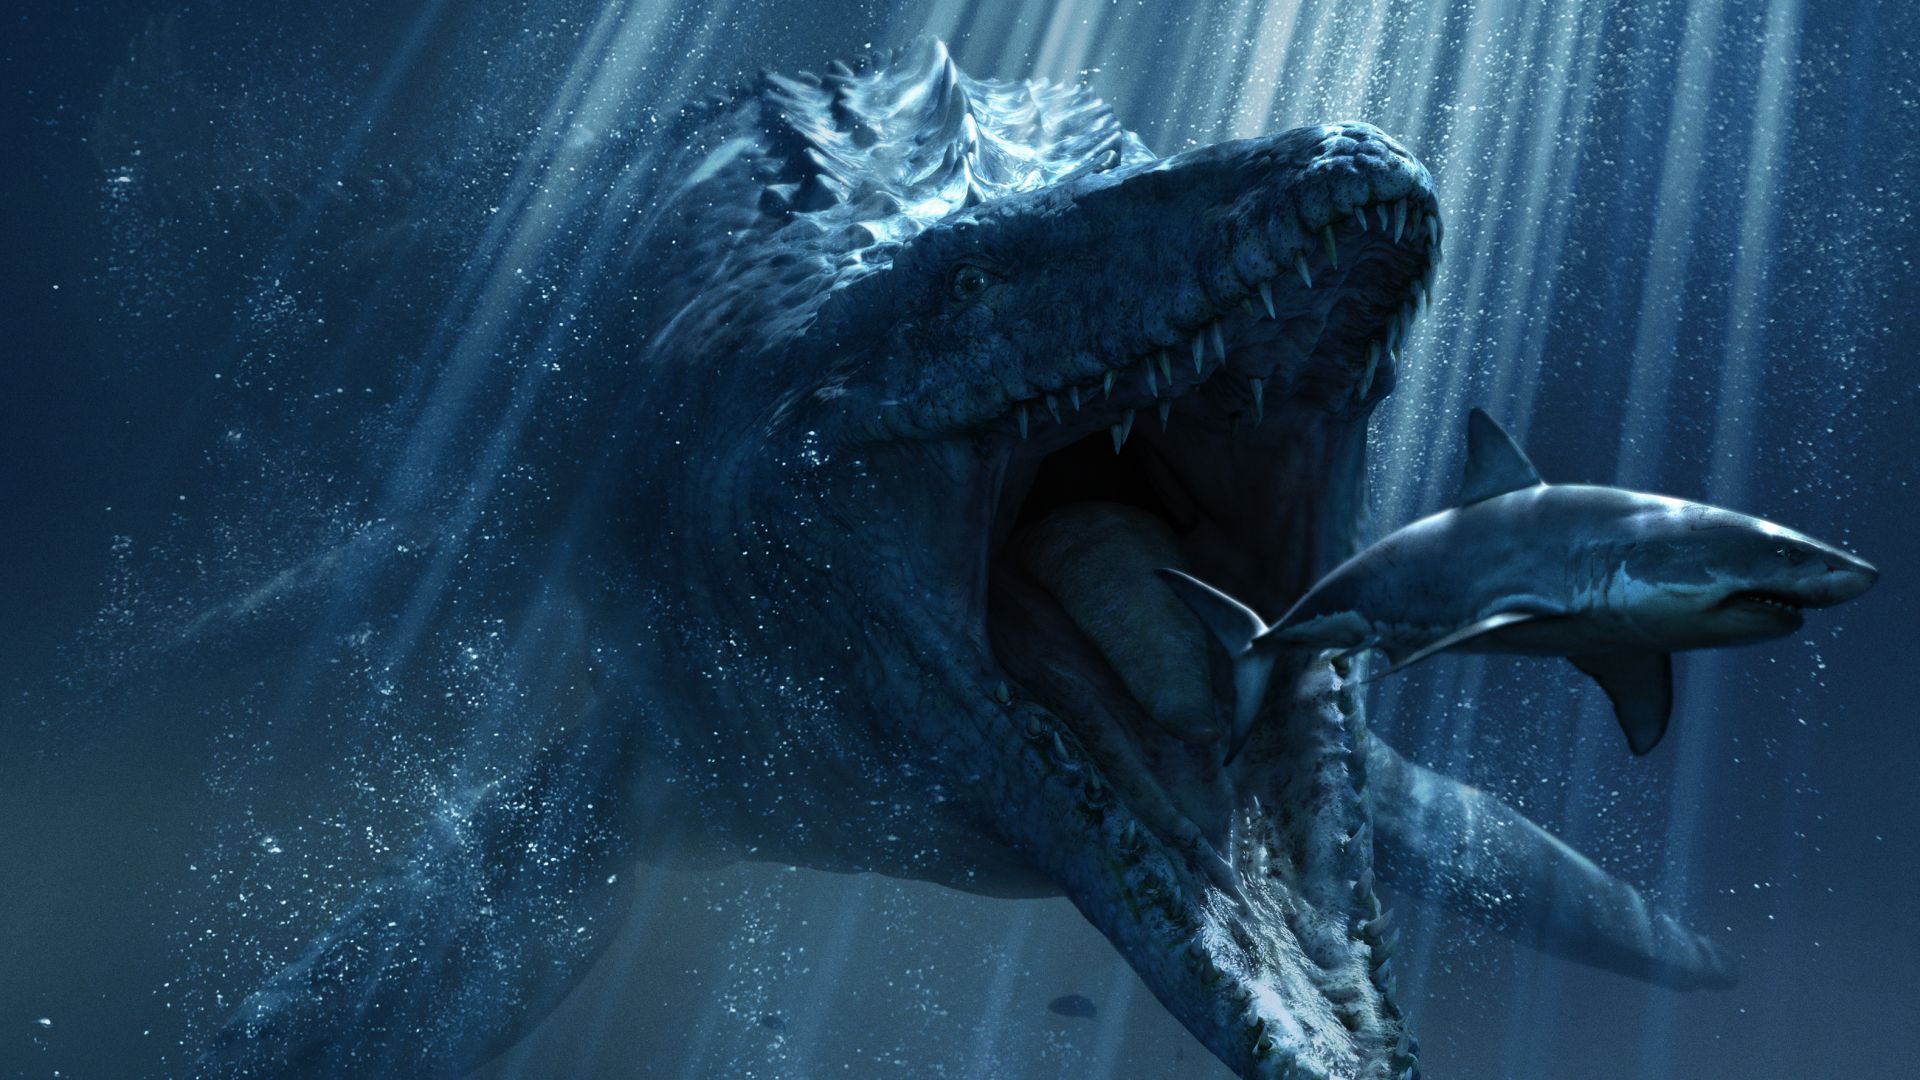 Jurassic World, Dinosaurs, Best Movies of 2015, movie, shark, dinosaur (horizontal)